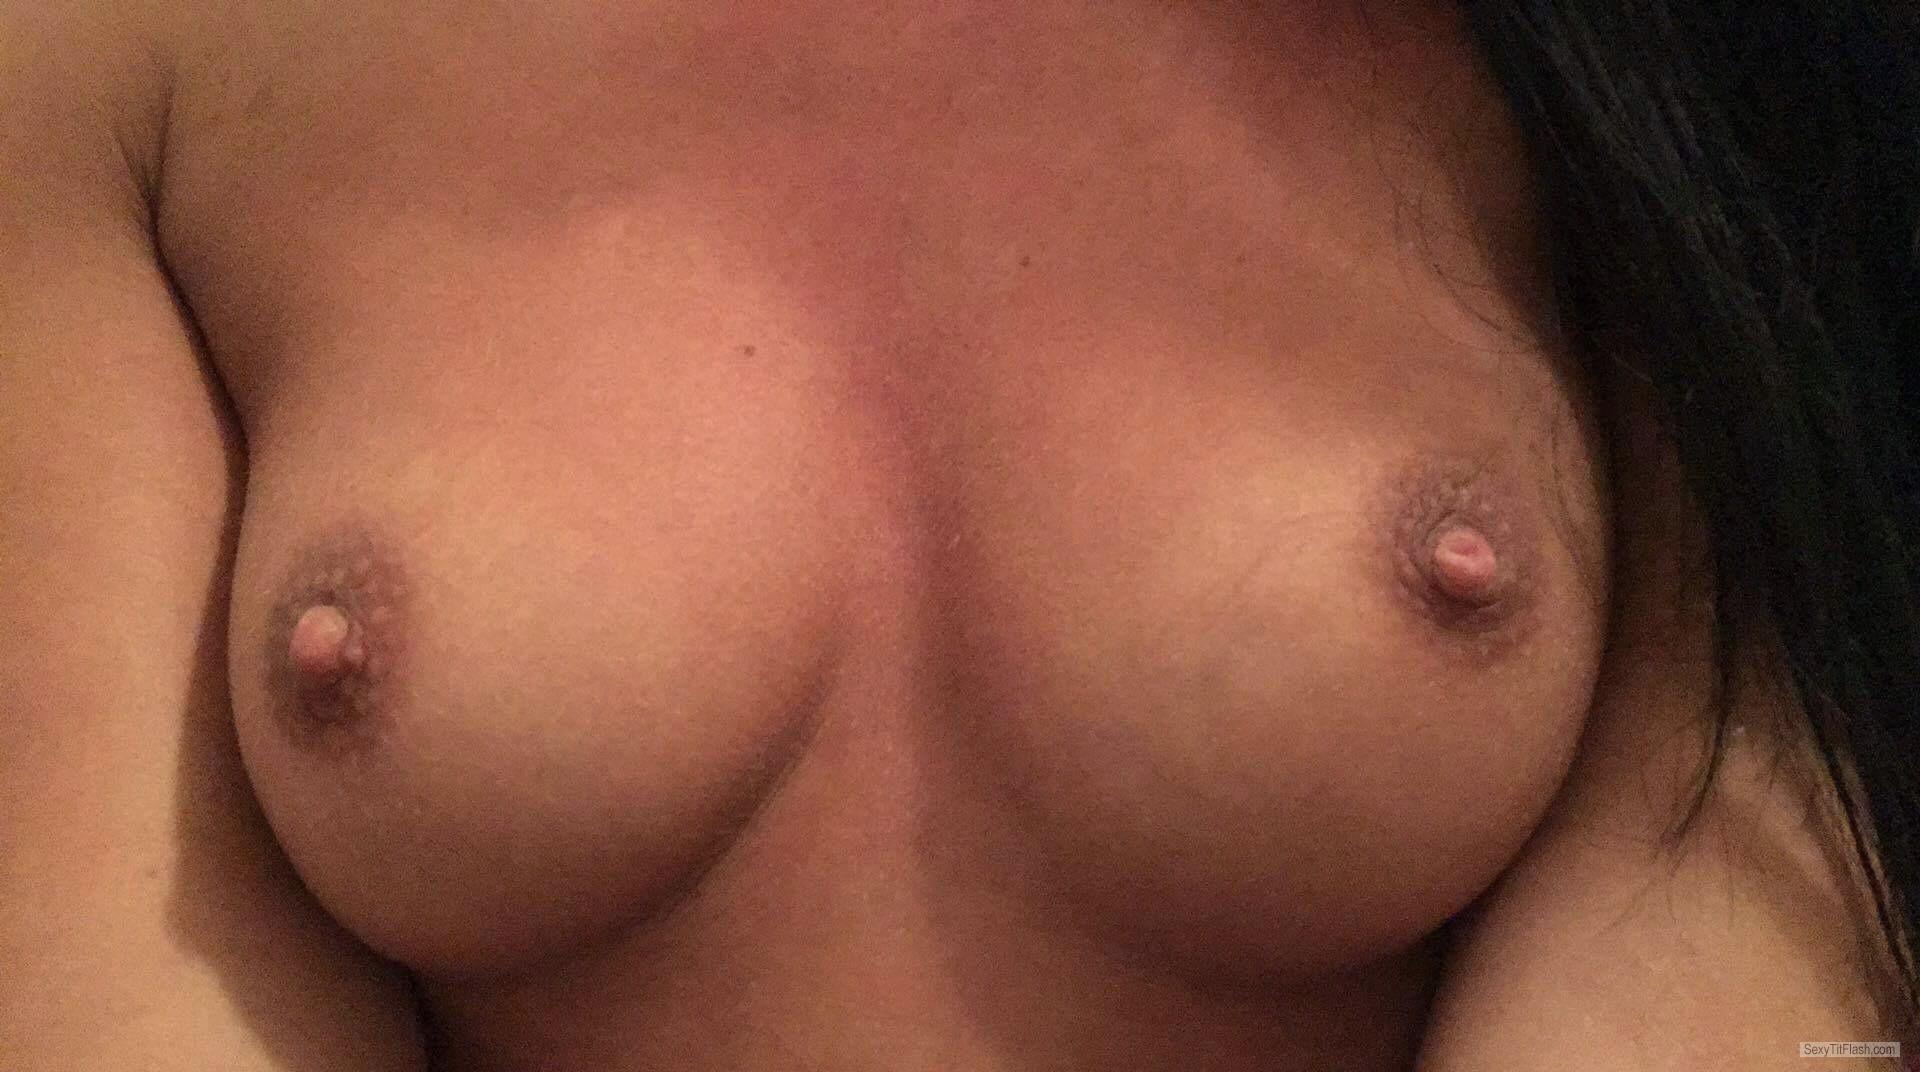 Tit Flash: Girlfriend's Medium Tits (Selfie) - MyGF’sTits from Sweden